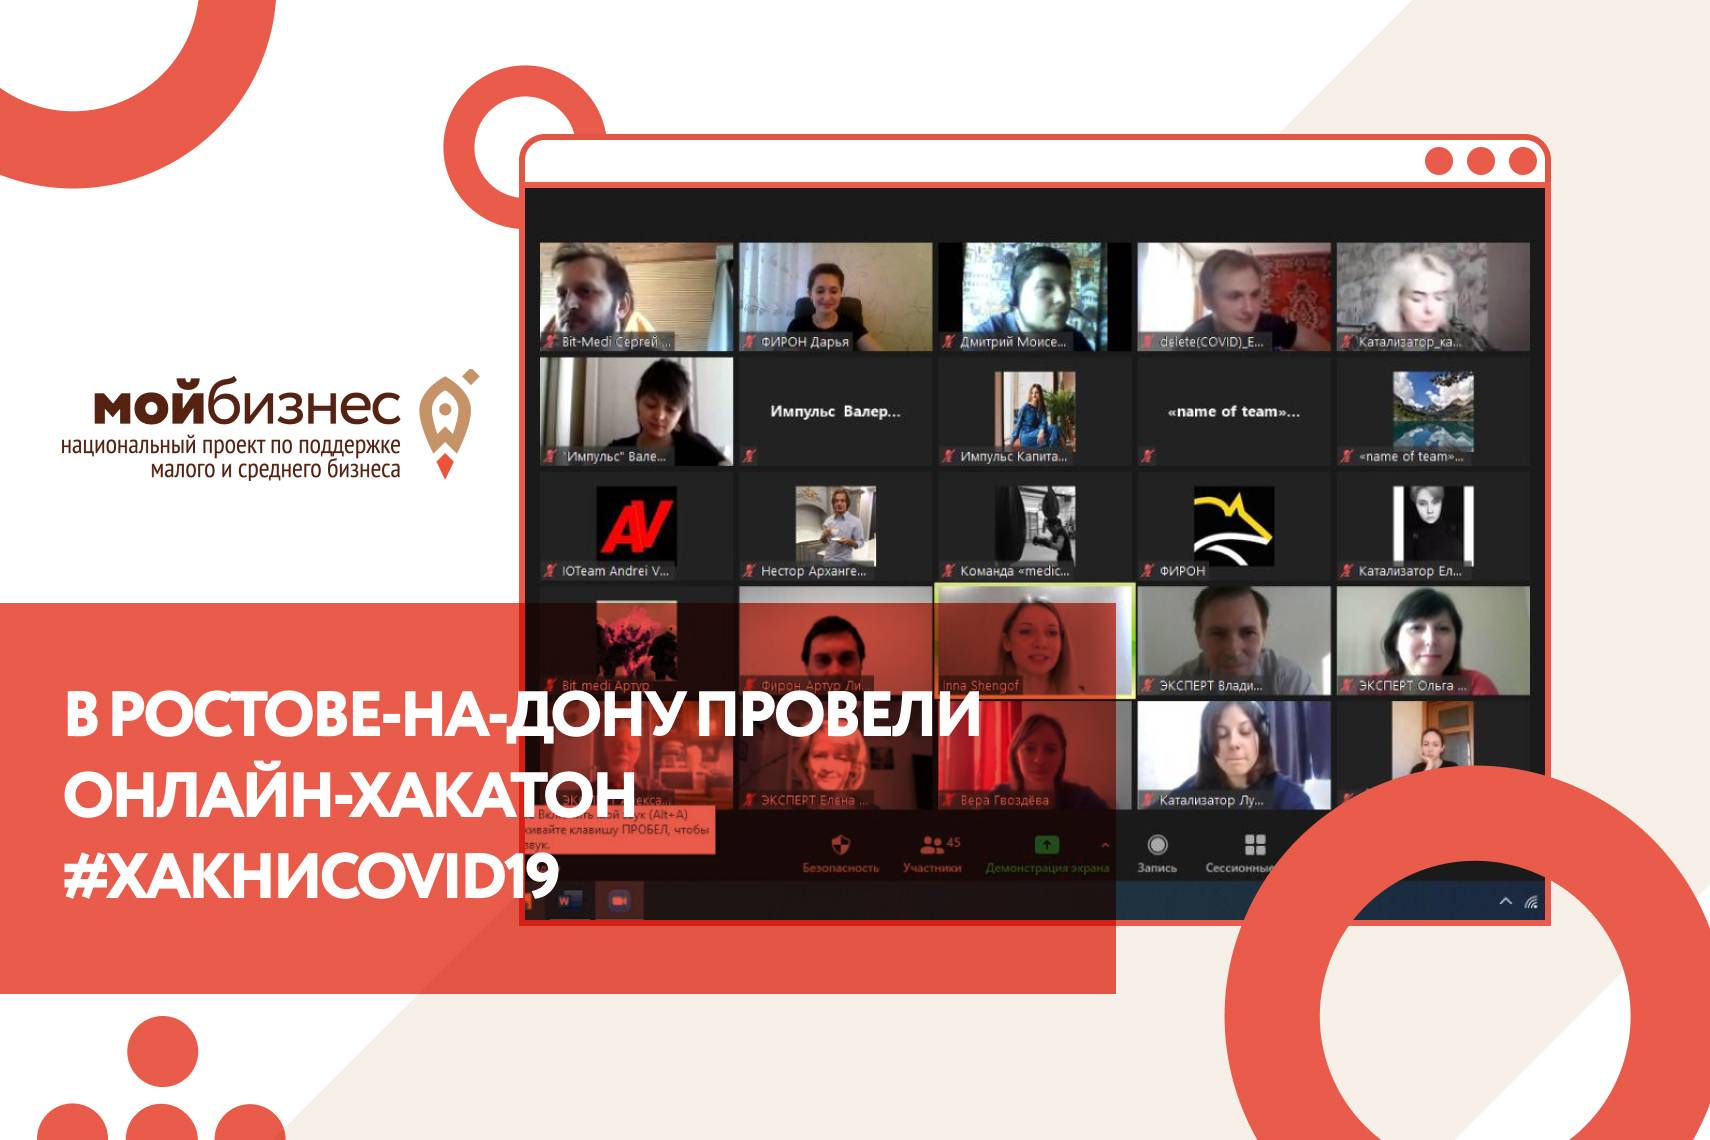 Современные IT-решения по борьбе с пандемией: в Ростове-на-Дону провели онлайн-хакатон #ХакниCOVID19